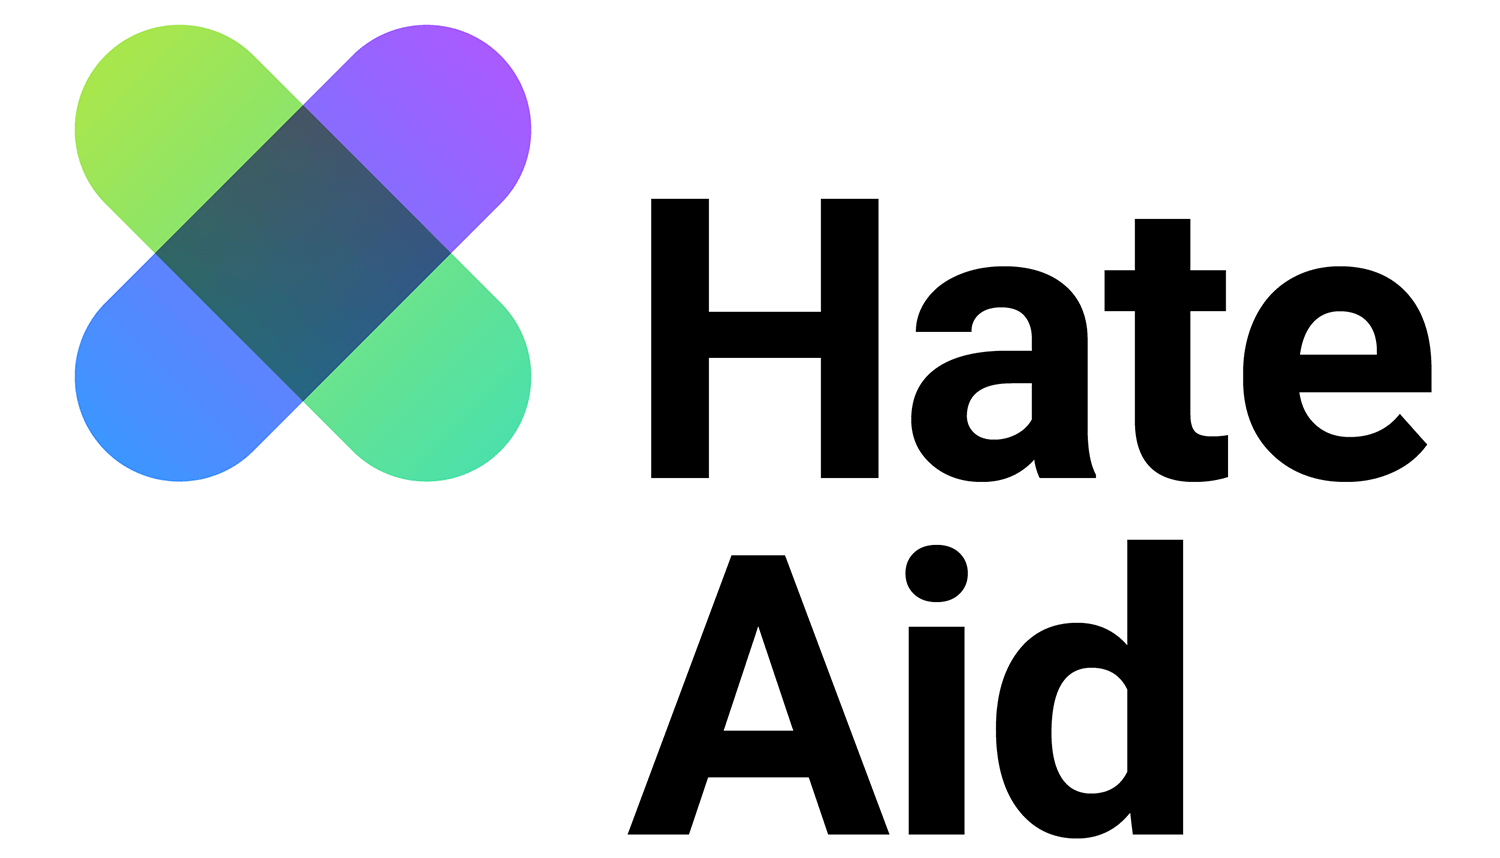 Logo Hate Aid